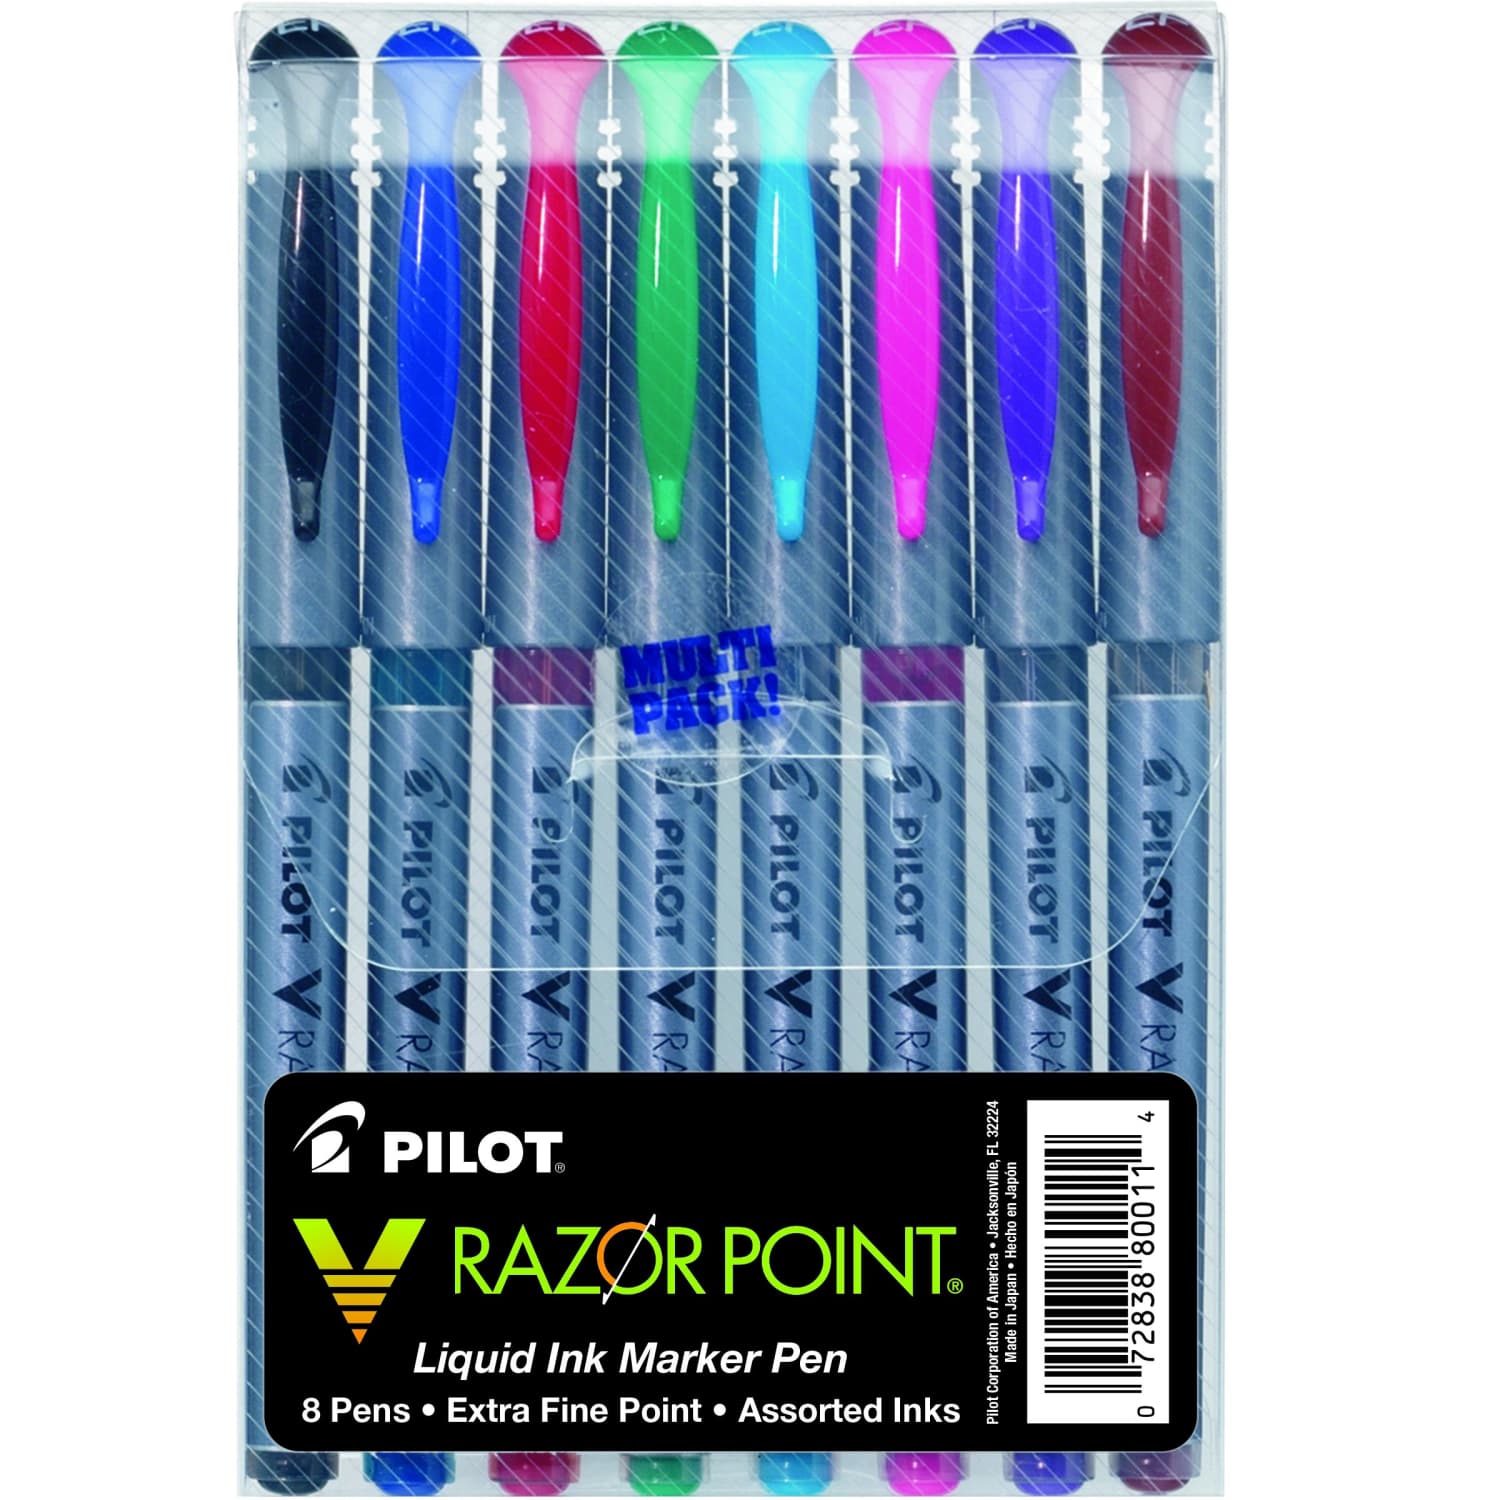 Pilot V Razor Point Liquid Ink Marker Pens, Extra Fine Point, Assorted, 8/Pack